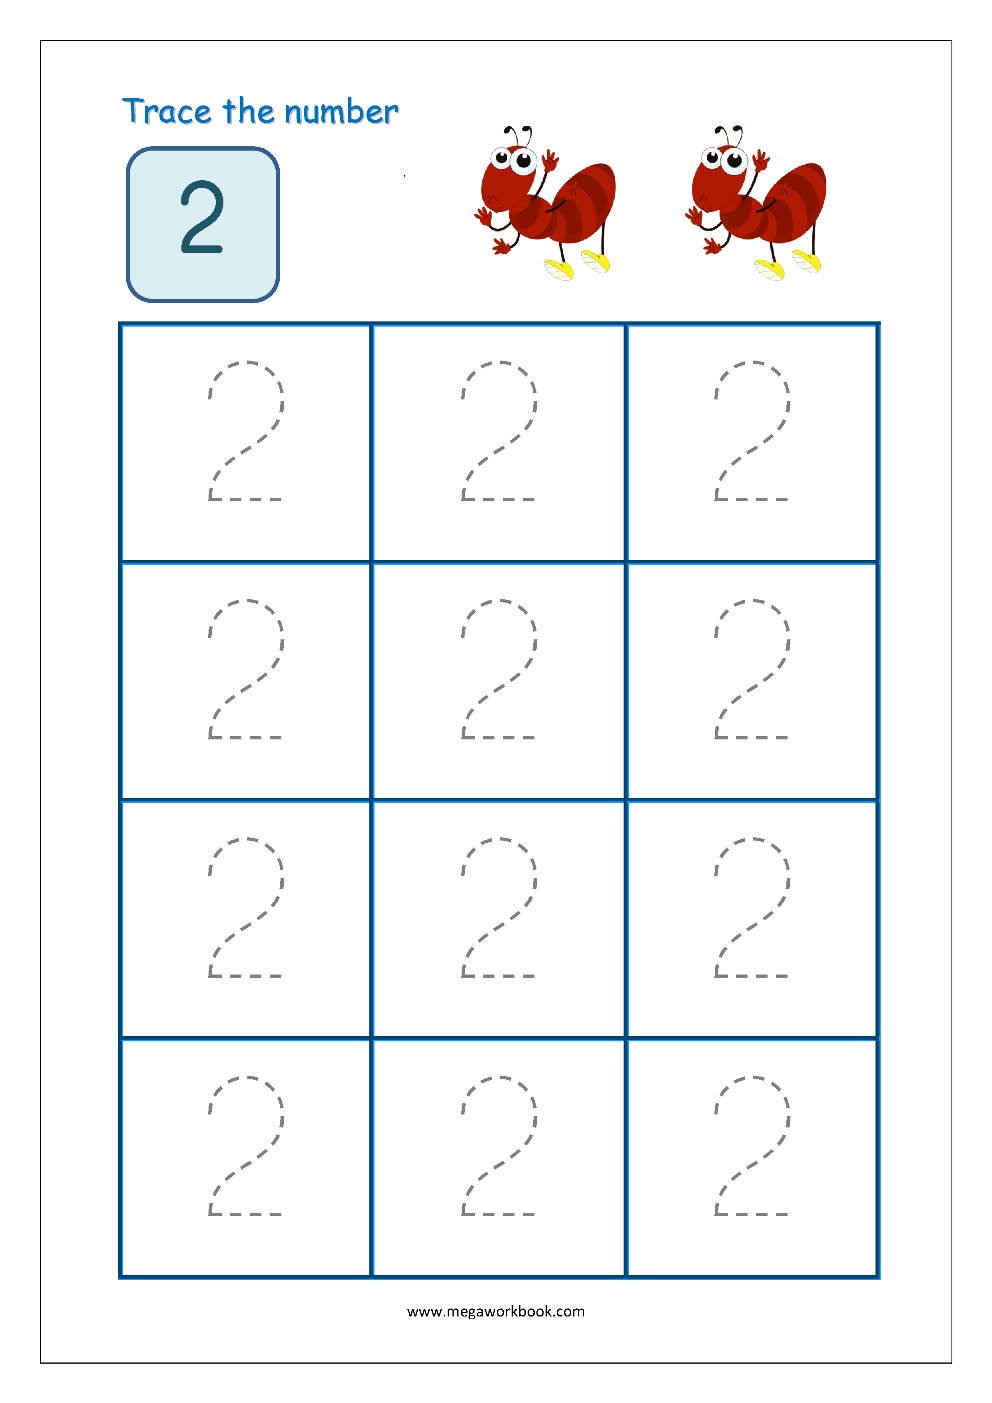 preschool-tracing-lines-beginner-worksheets-for-2-year-olds